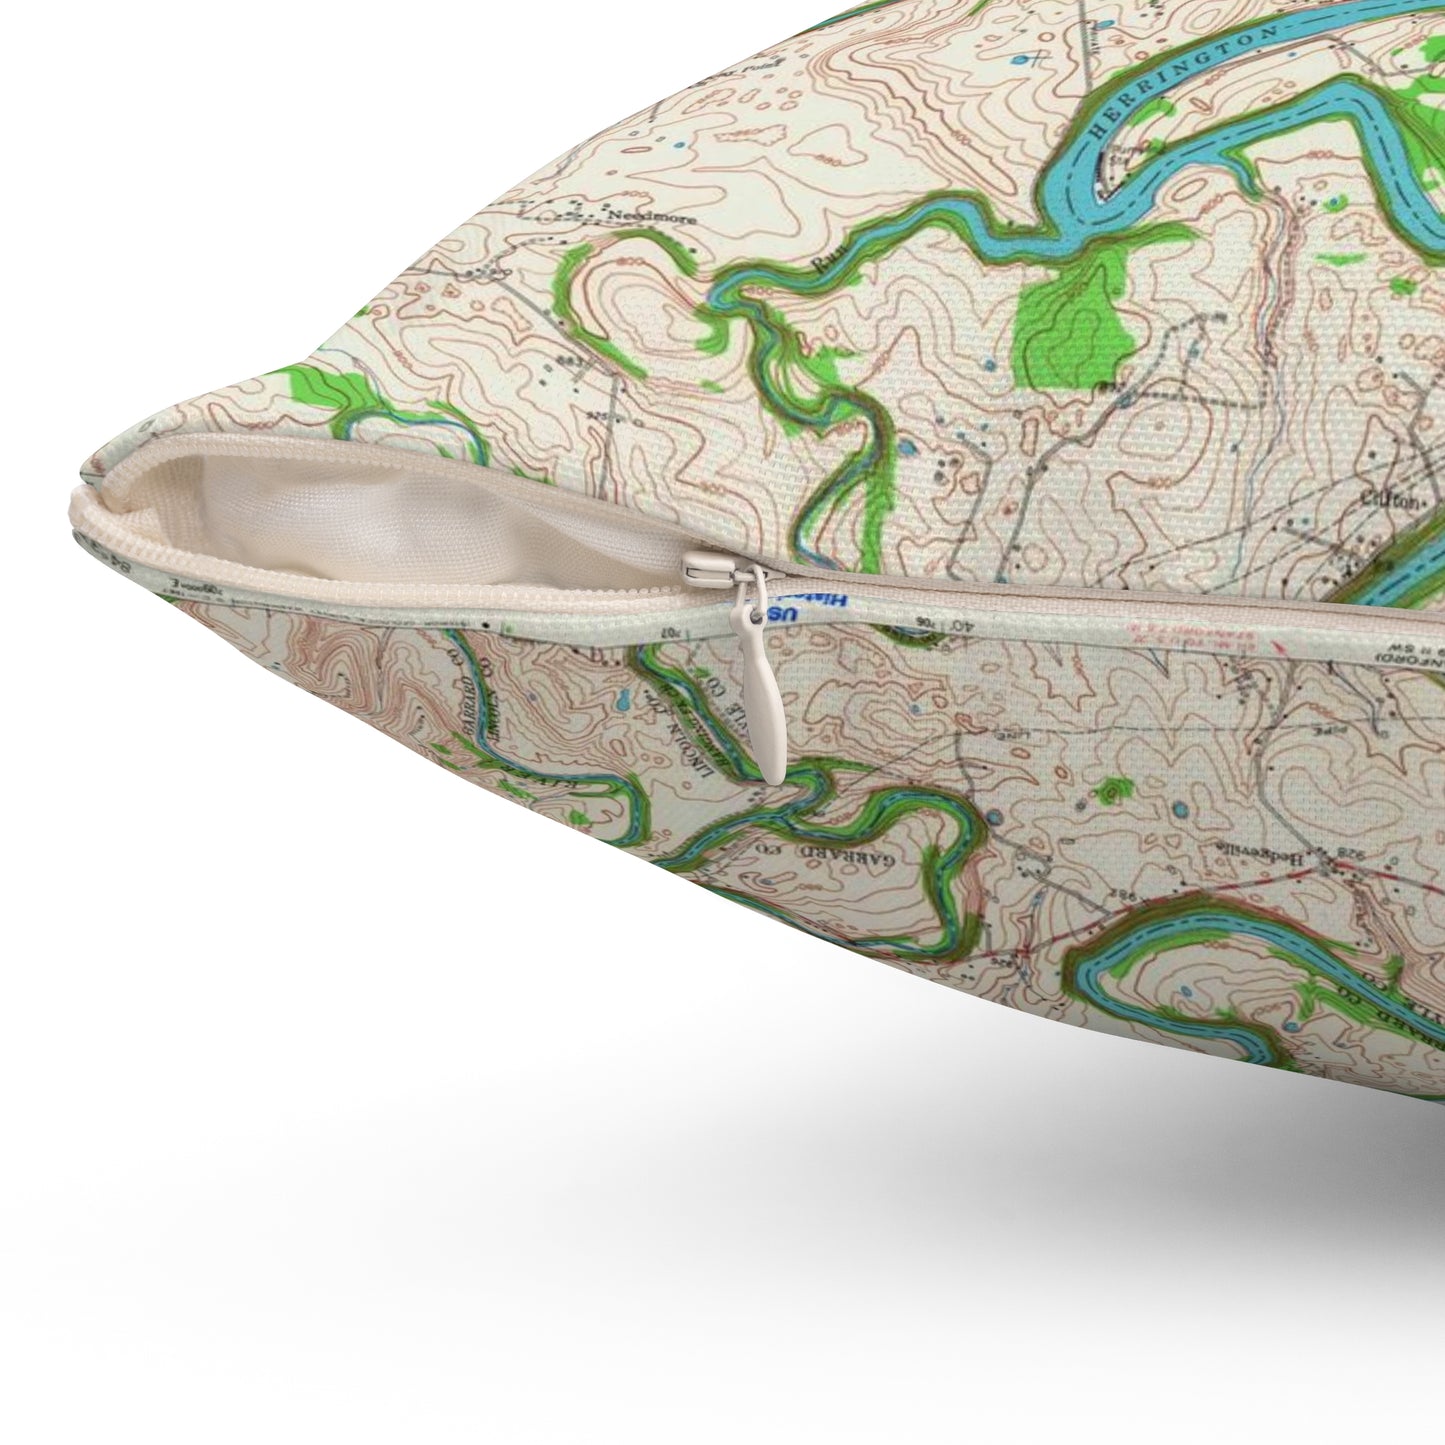 Herrington Lake Bryantsville Quadrangle USGS Topography Map Spun Polyester Square Accent Pillow